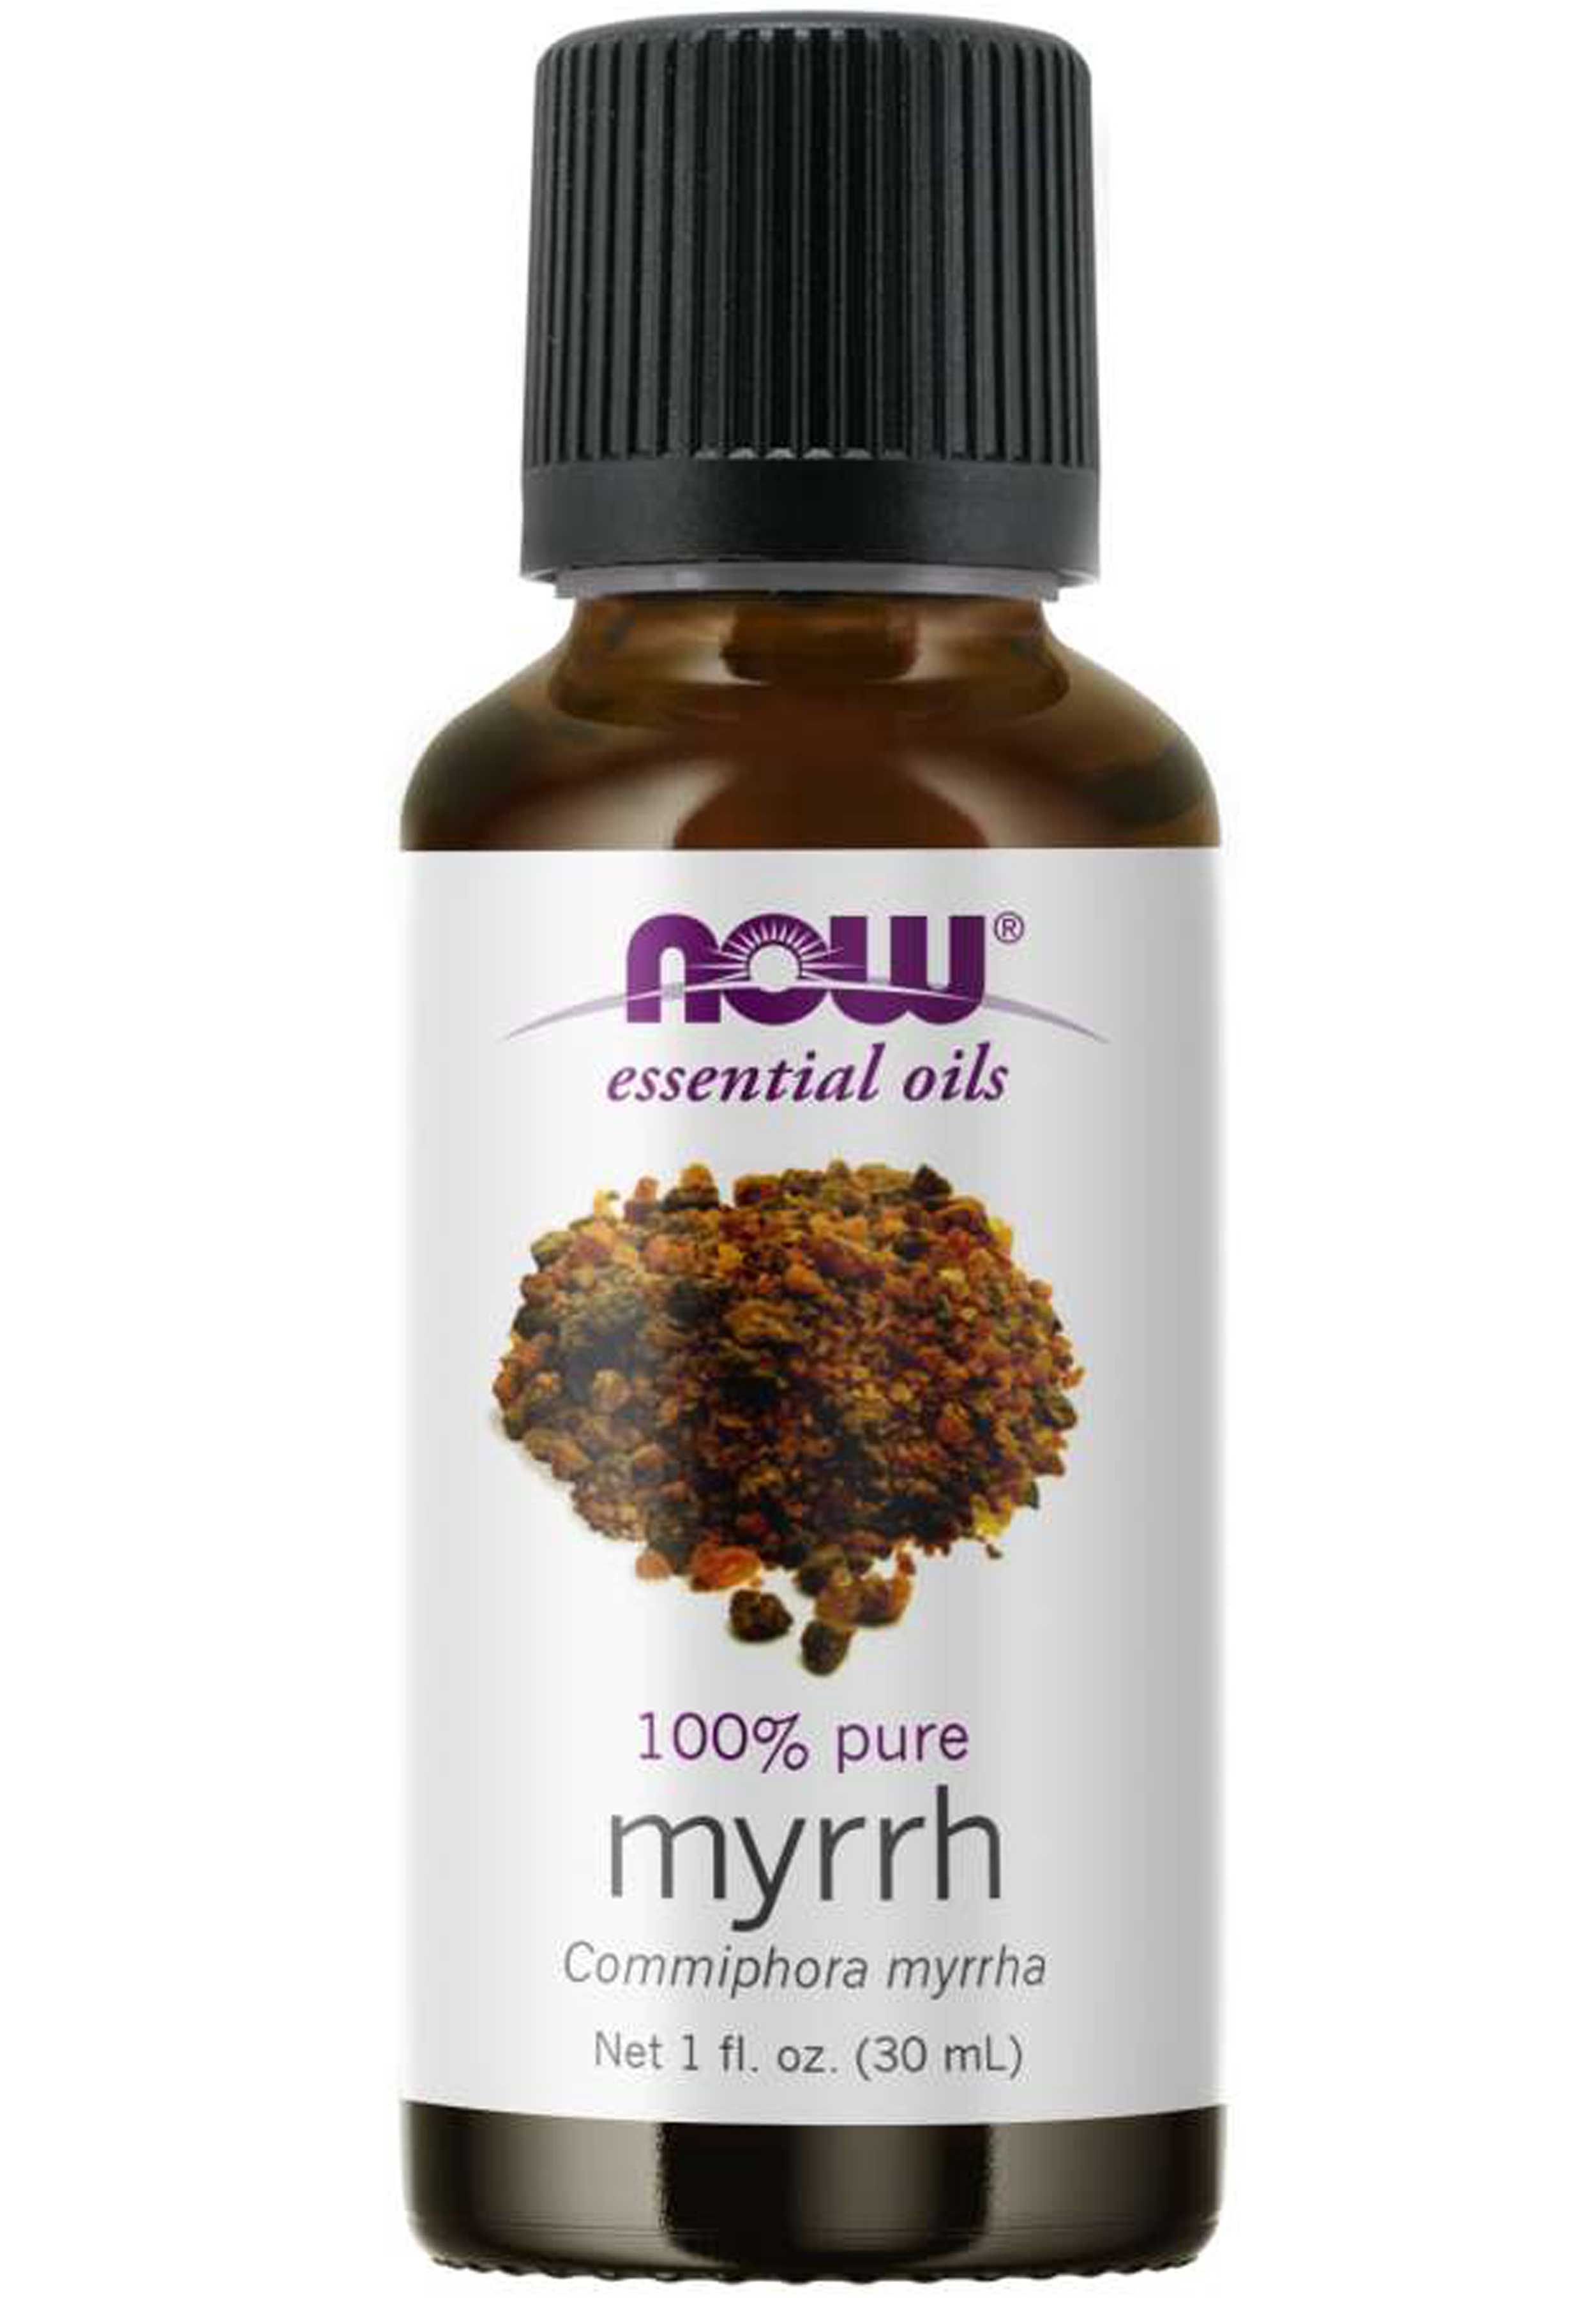 NOW Essential Oils Myrrh Oil